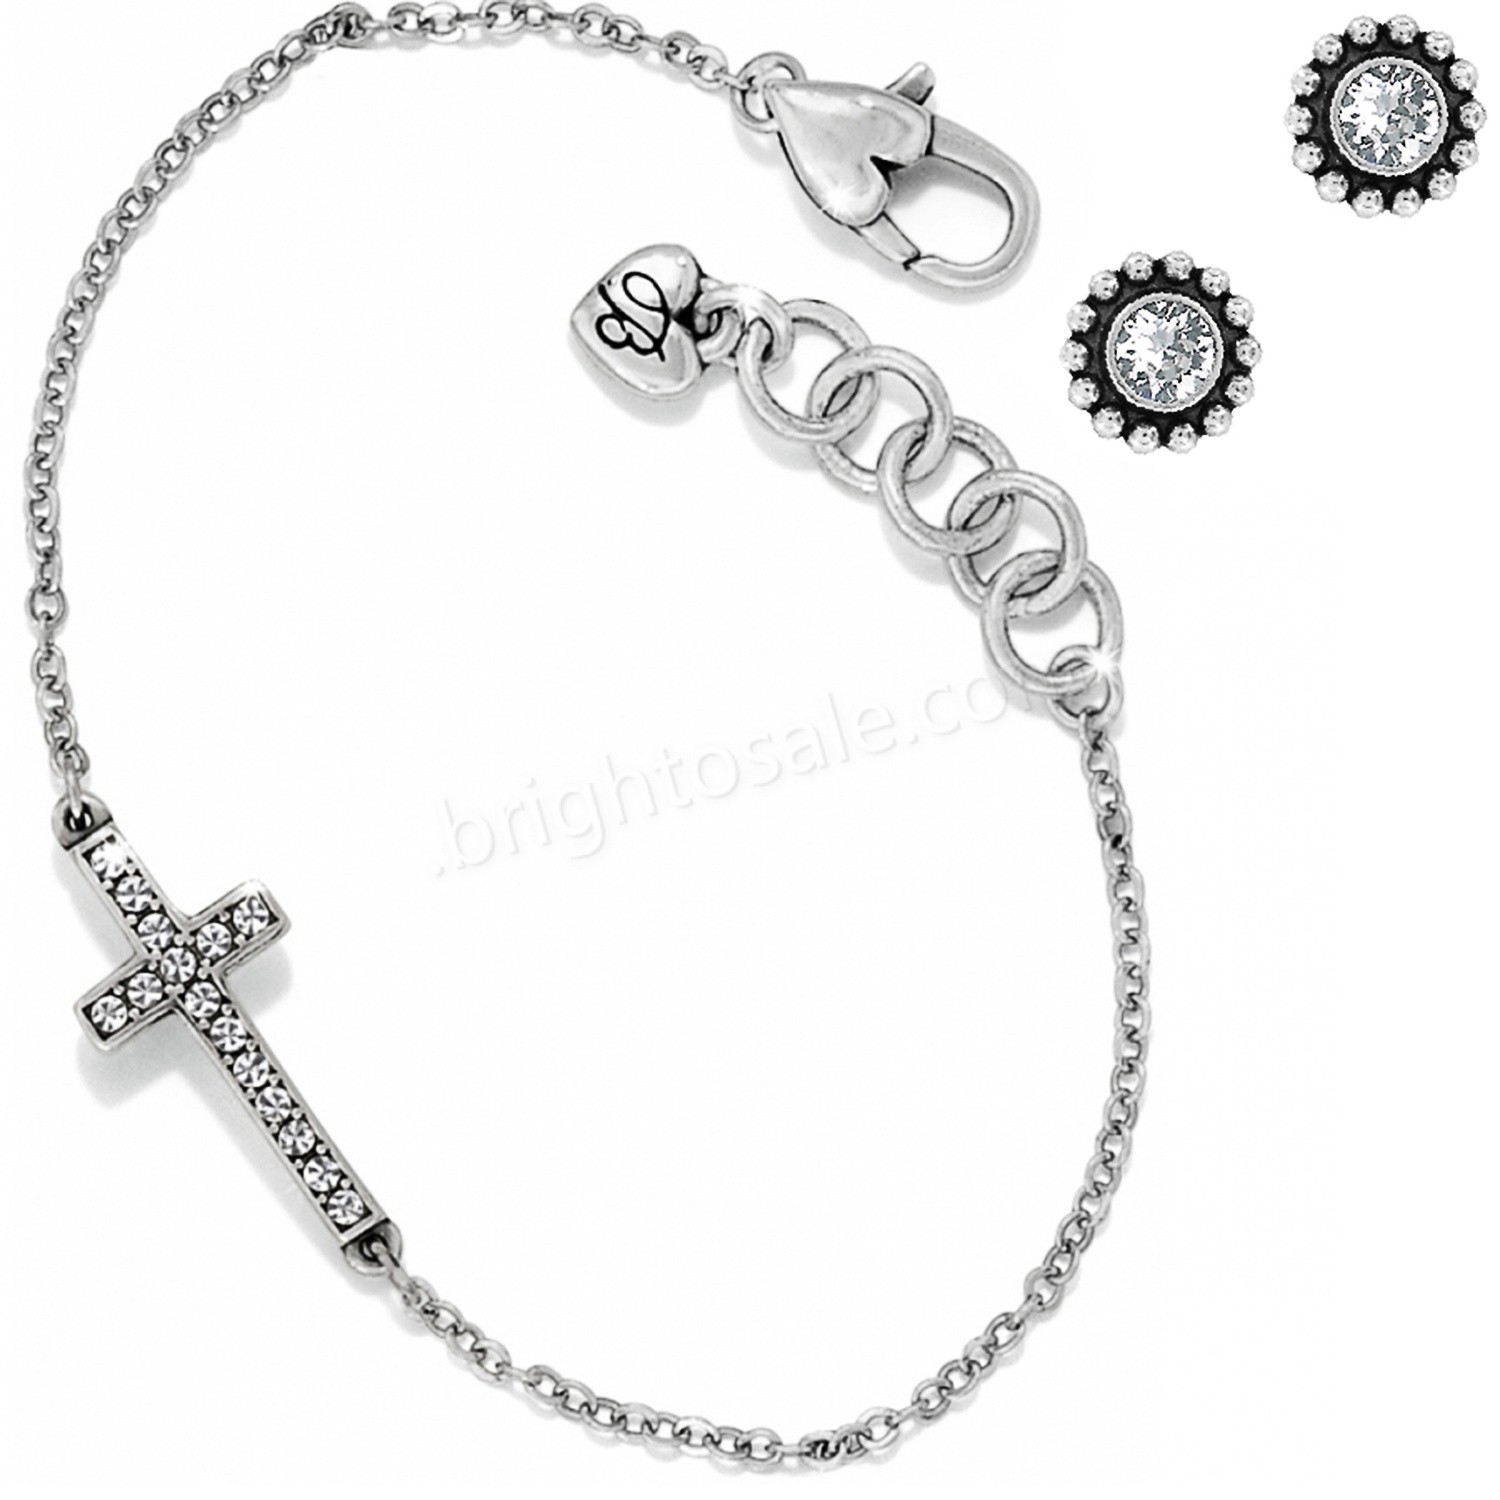 Brighton Collectibles & Online Discount Chara Heart Necklace - Brighton Collectibles & Online Discount Chara Heart Necklace